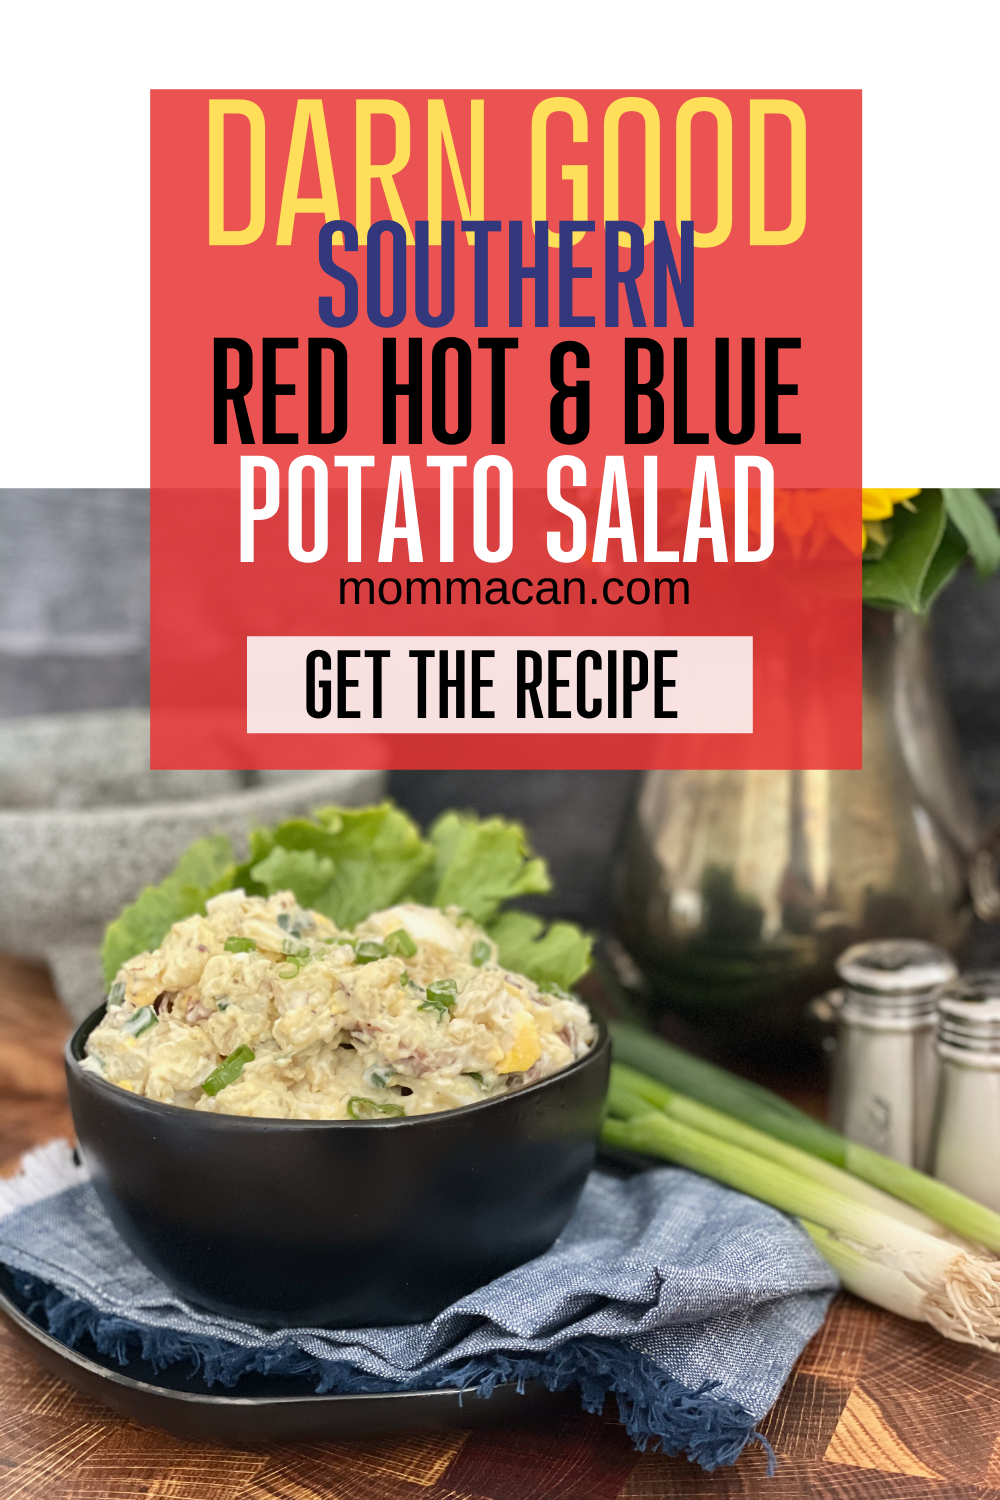 Green potato salad and red hot pot